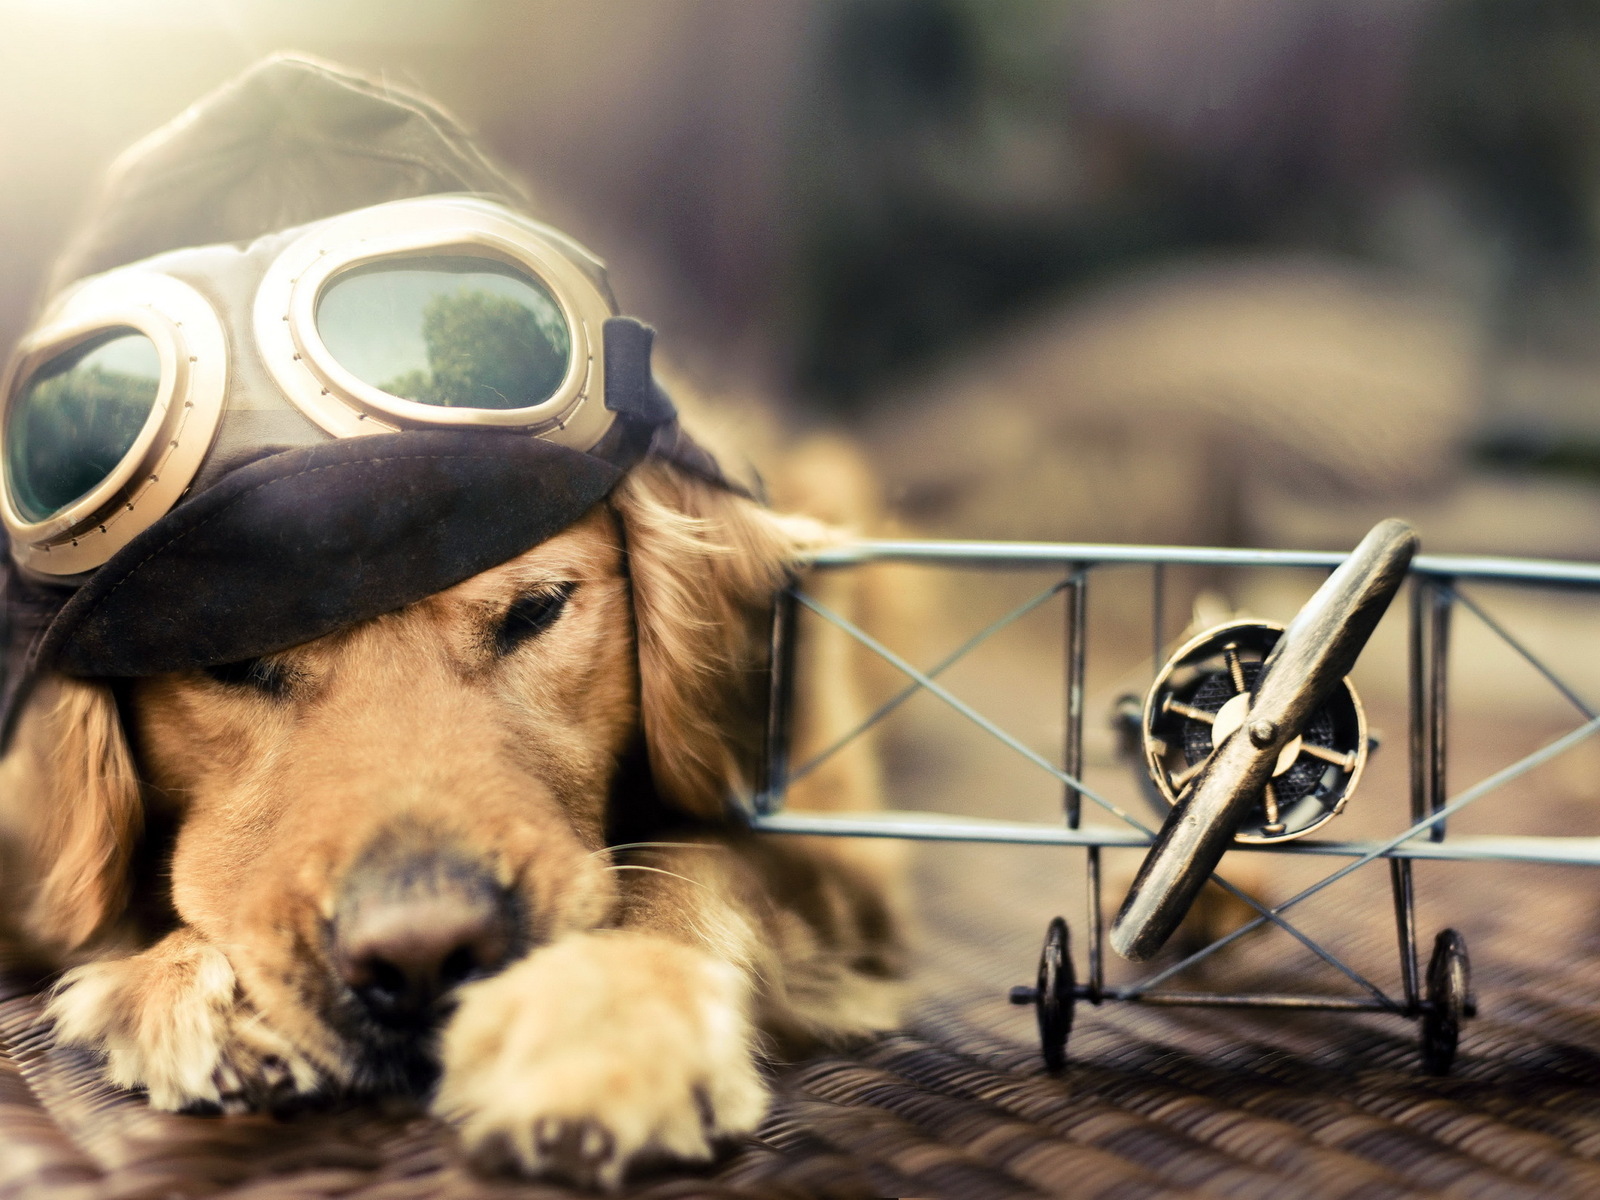 Mobile Desktop Background Funny Images Of Dogs Download